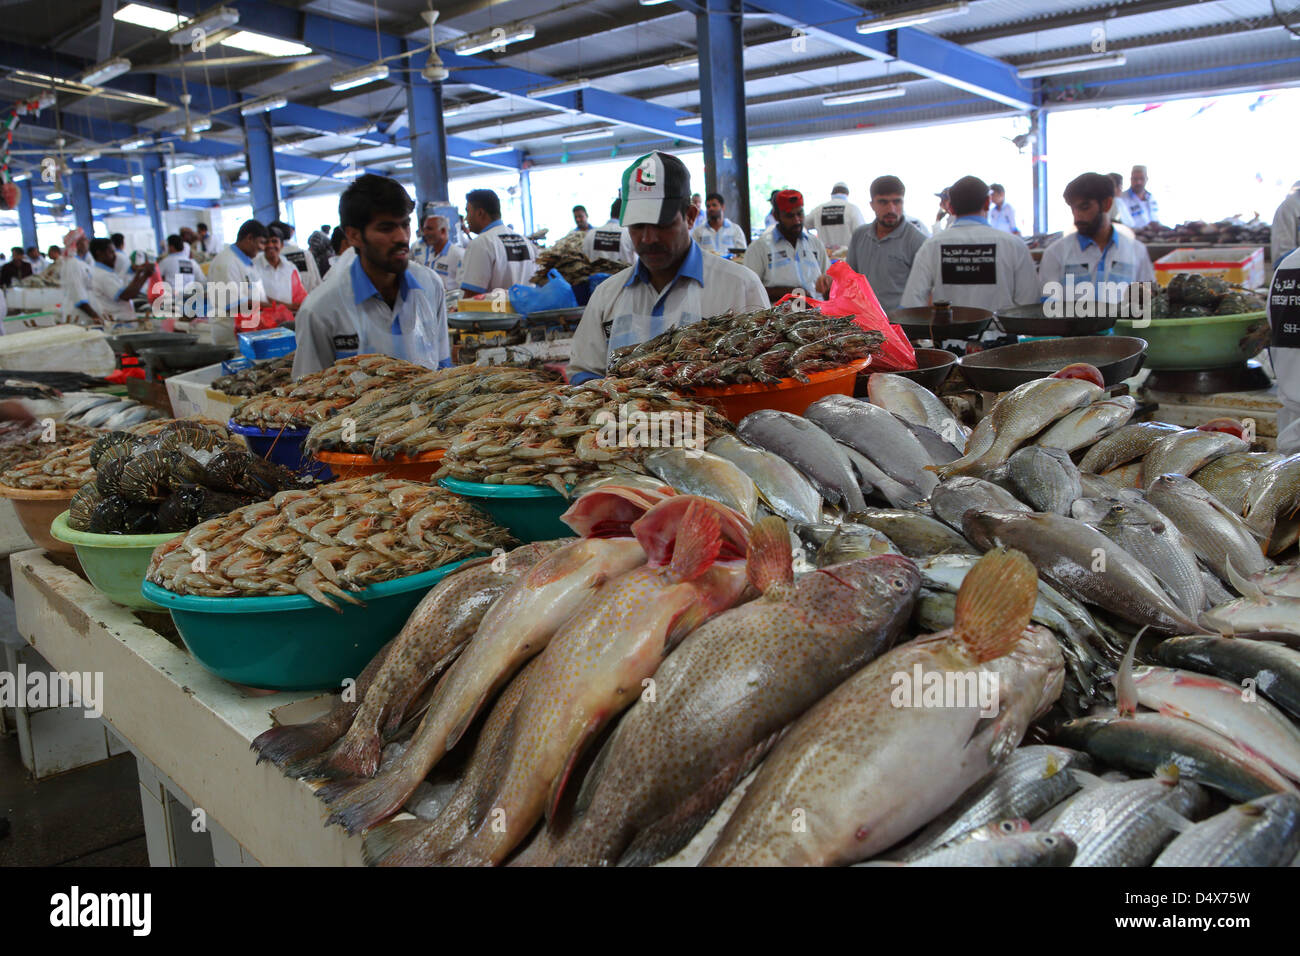 Fish on display at market in Dubai, United Arab Emirates Stock Photo